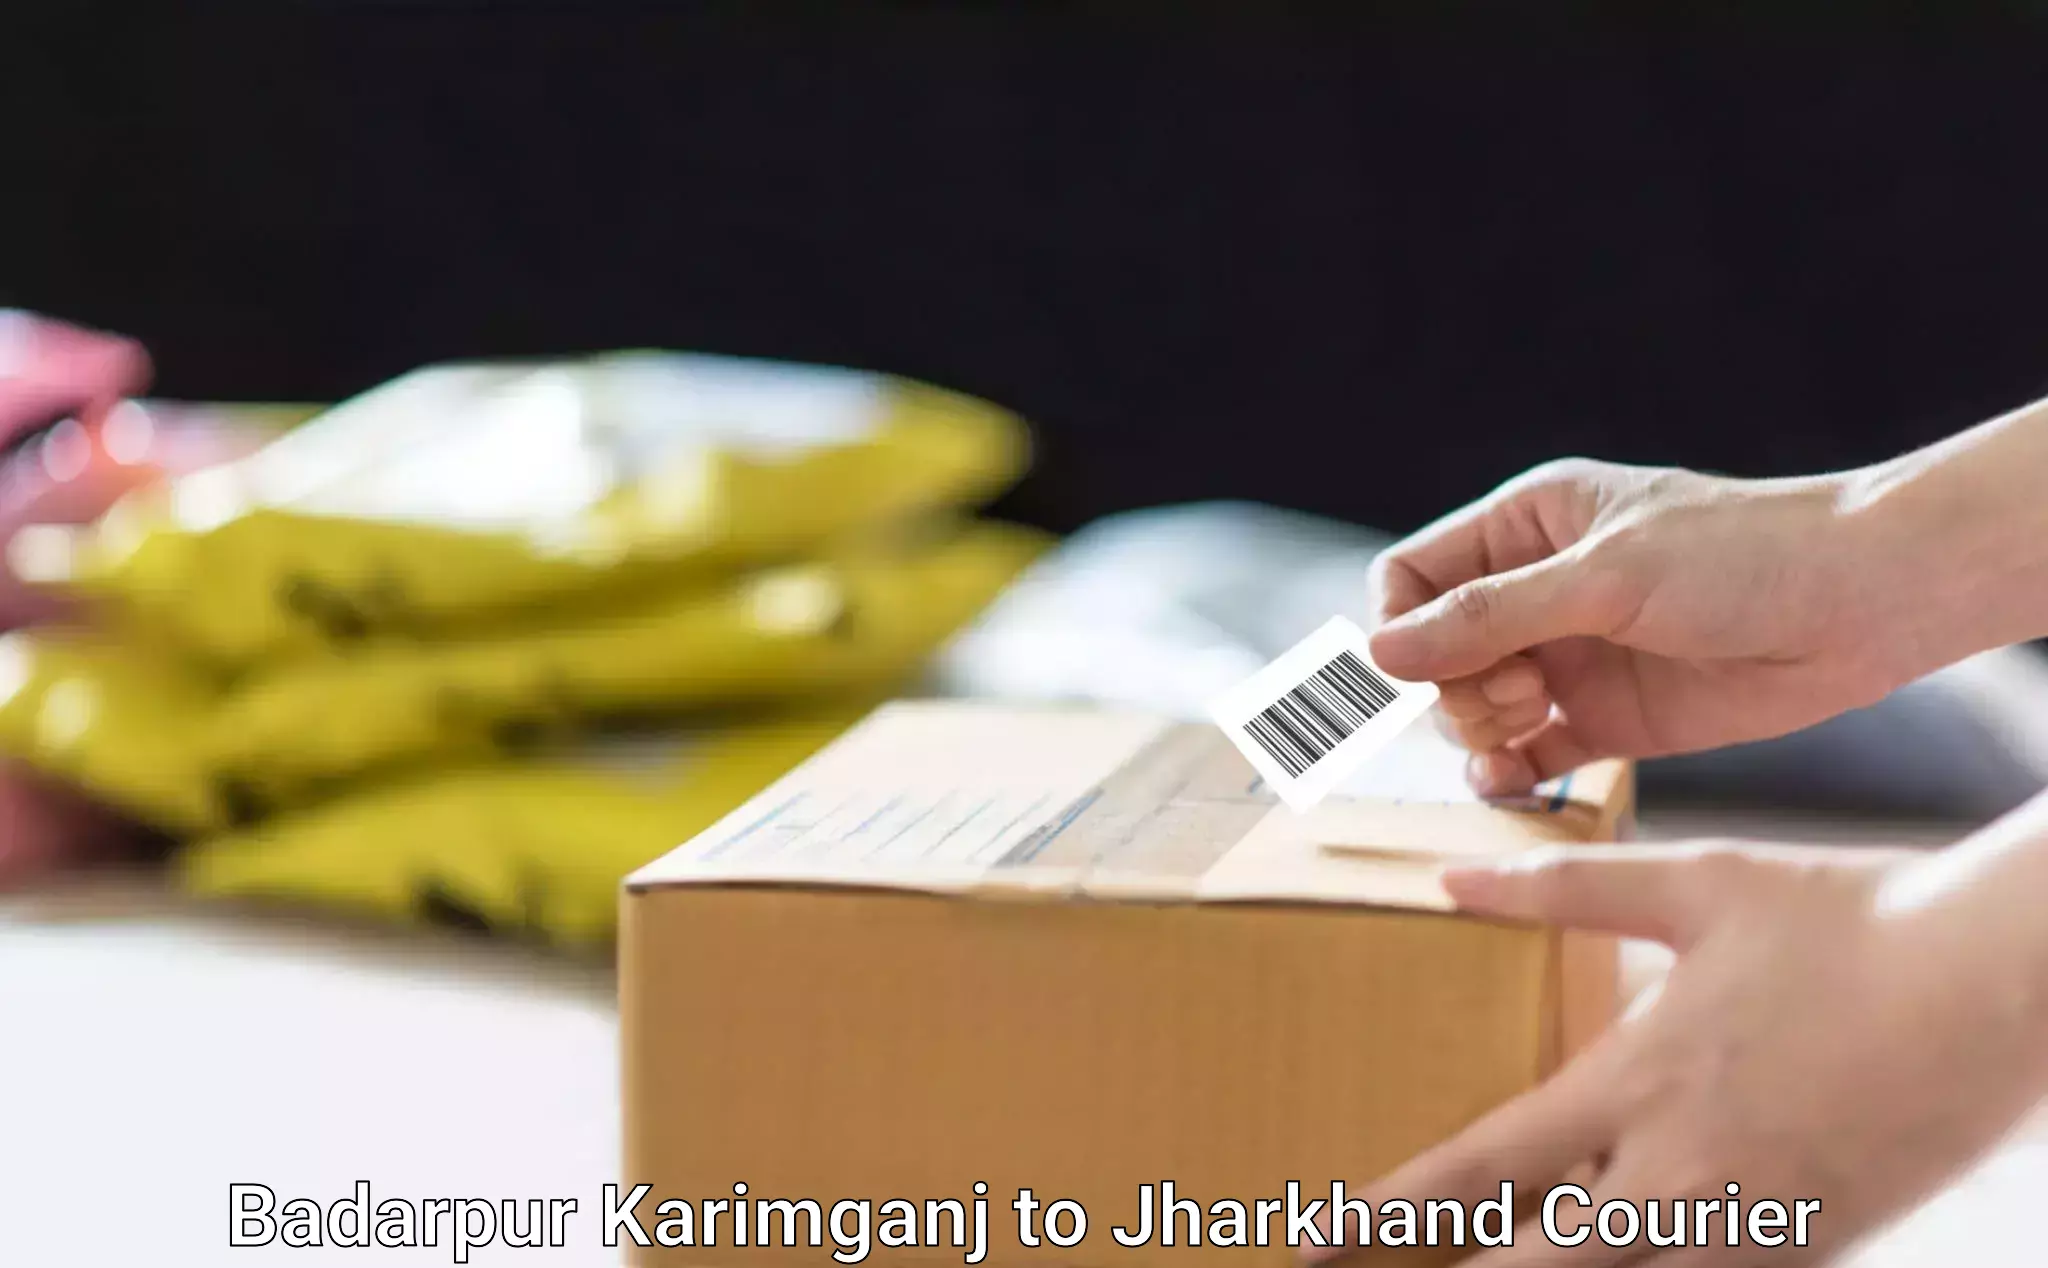 Professional parcel services Badarpur Karimganj to Jharkhand